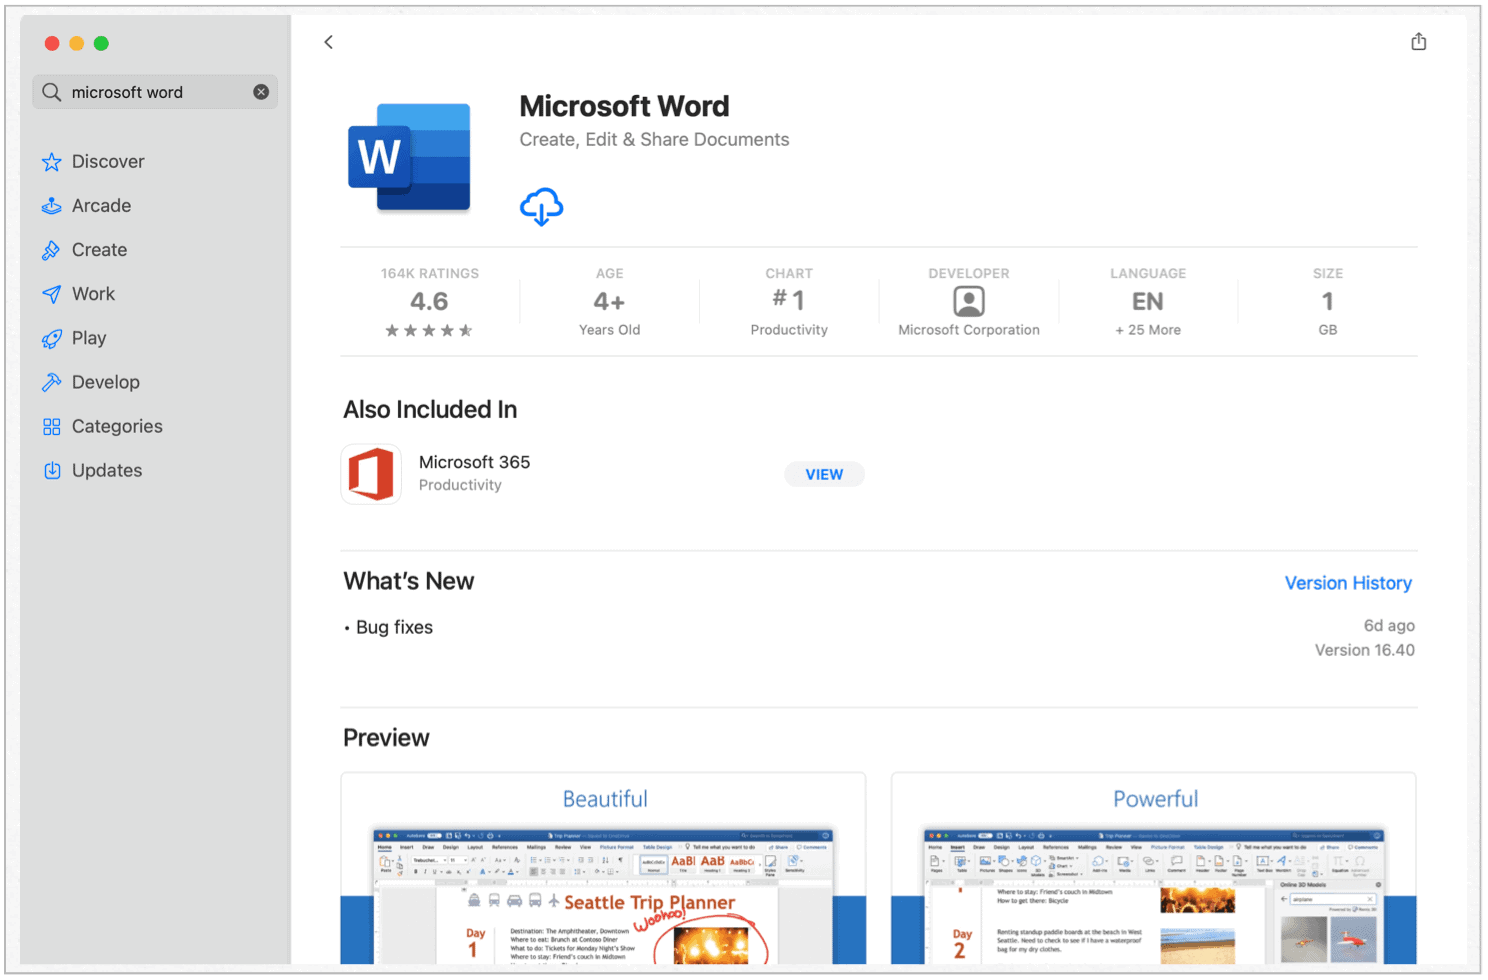 microsoft word free download mac